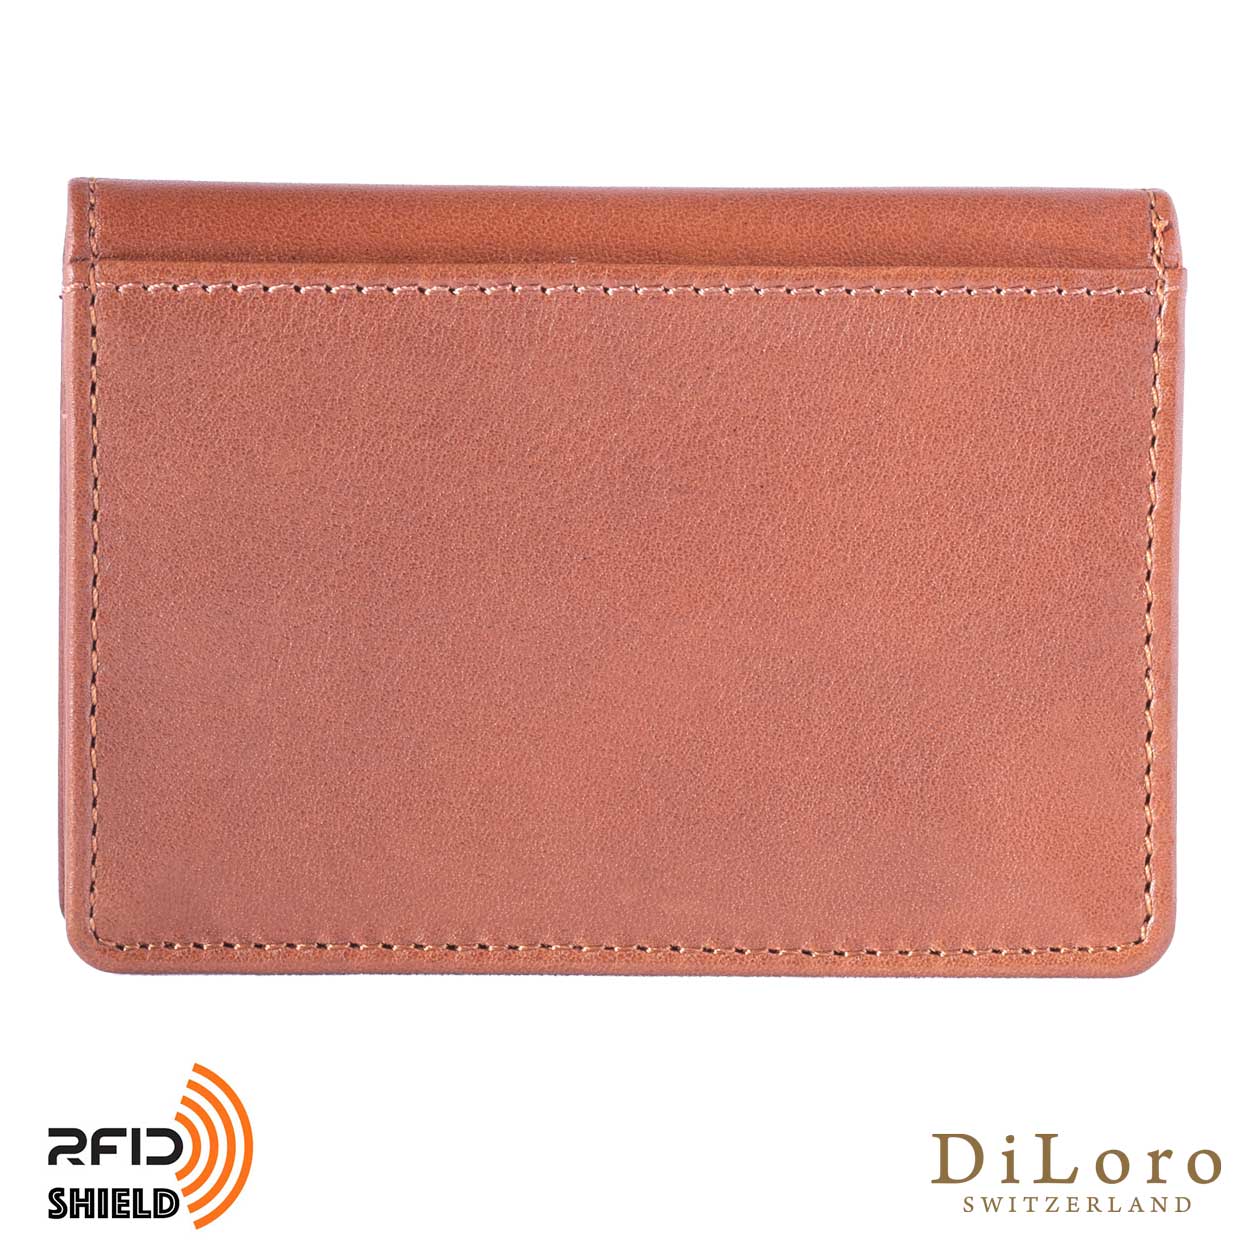 DiLoro Italy RFID Blocking Bifold Slim Genuine Leather Business Card Wallet Bugatti Tan - Back View